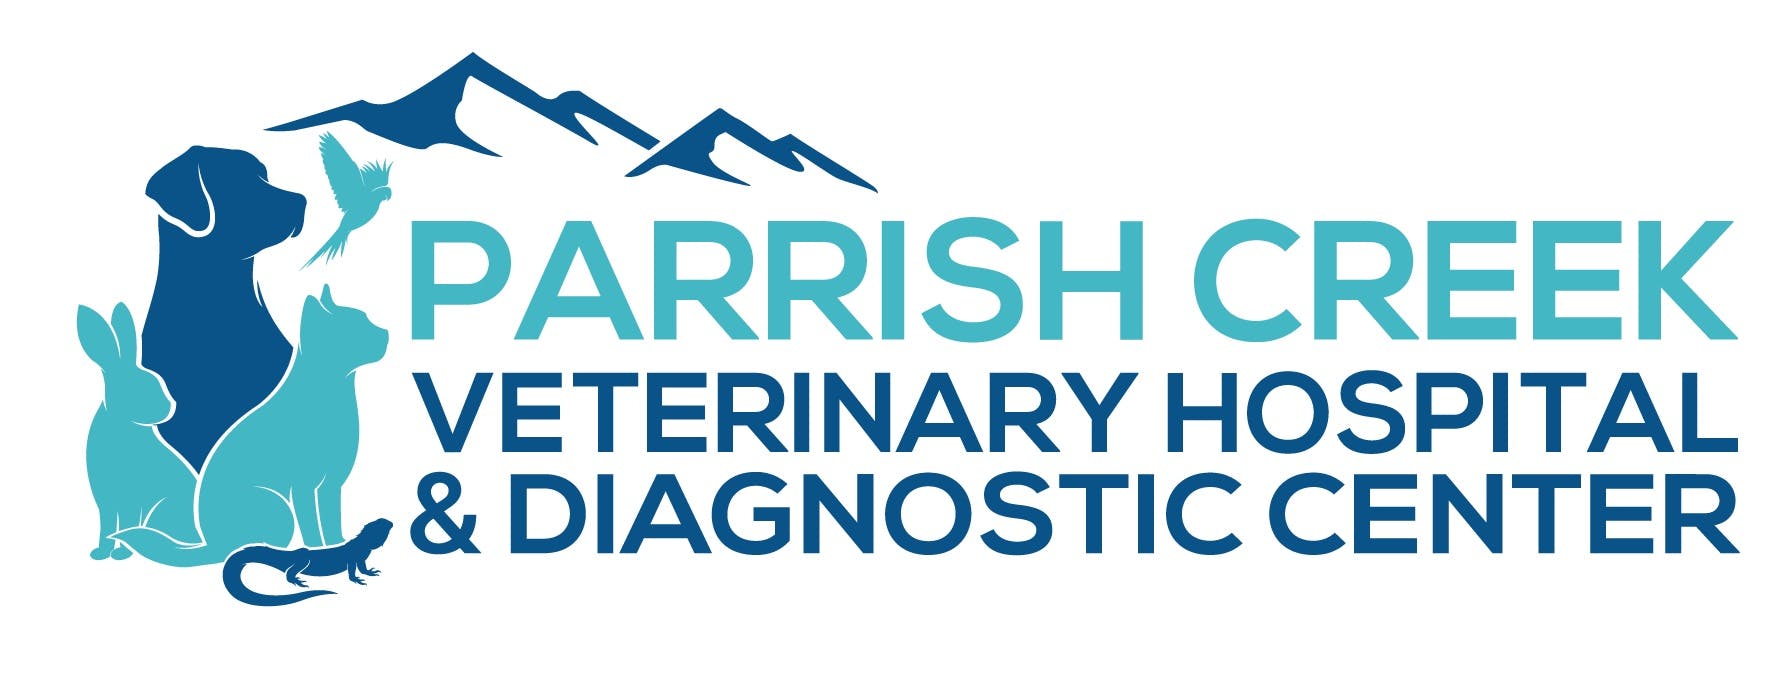 Parrish Creek Veterinary Hospital & Diagnostics Center Logo